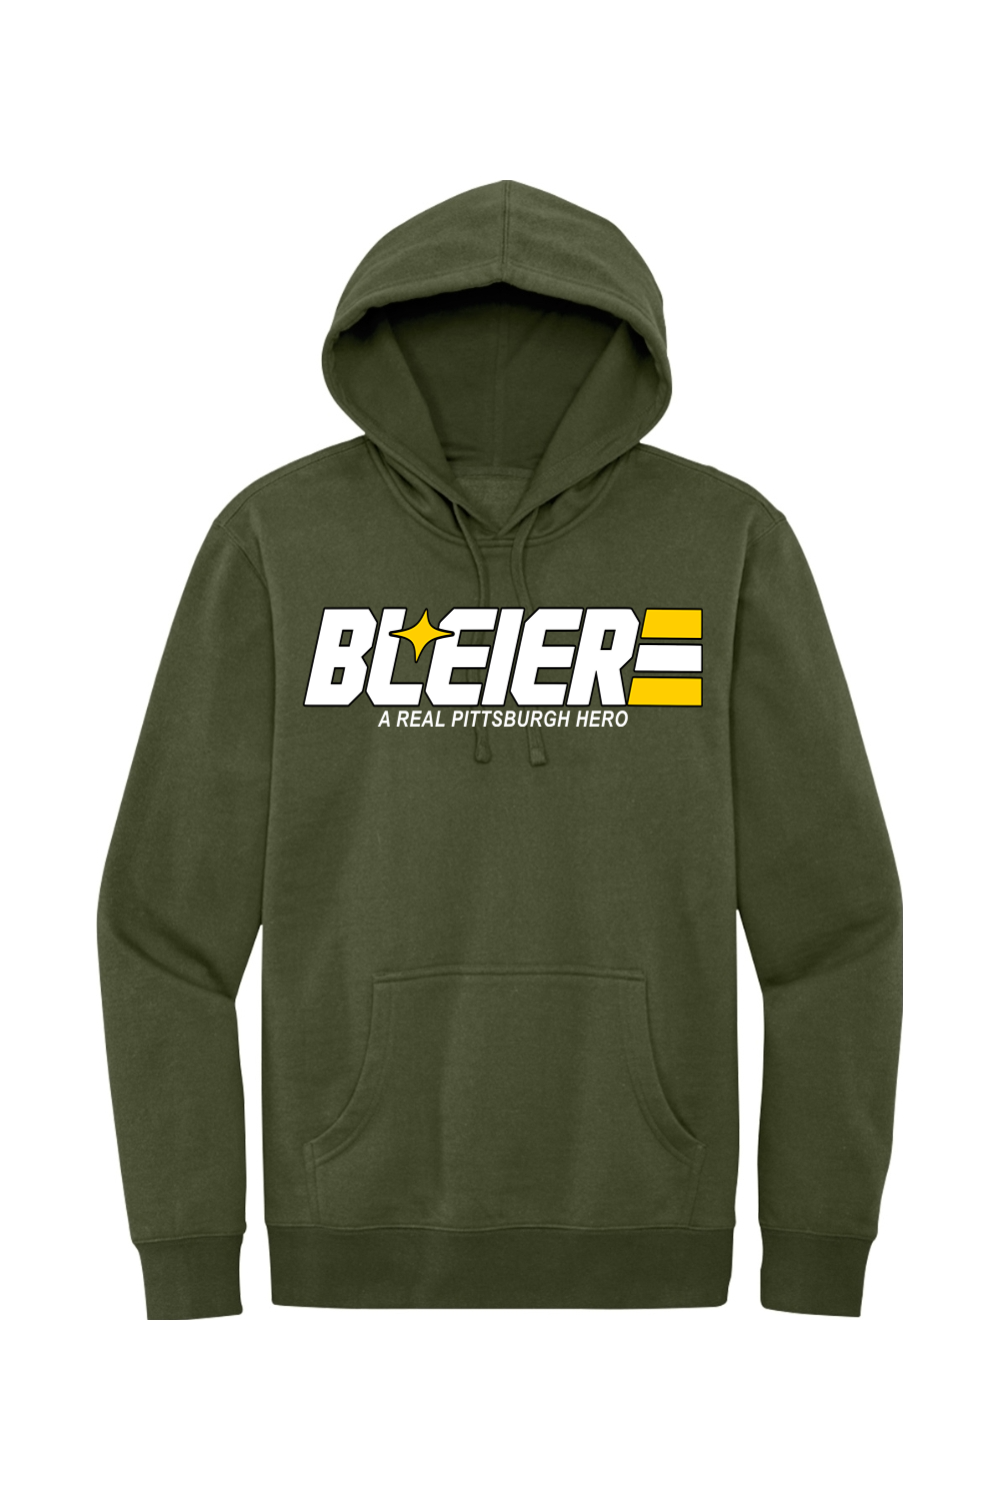 Bleier - A Real Pittsburgh Hero - Fleece Hoodie - Yinzylvania